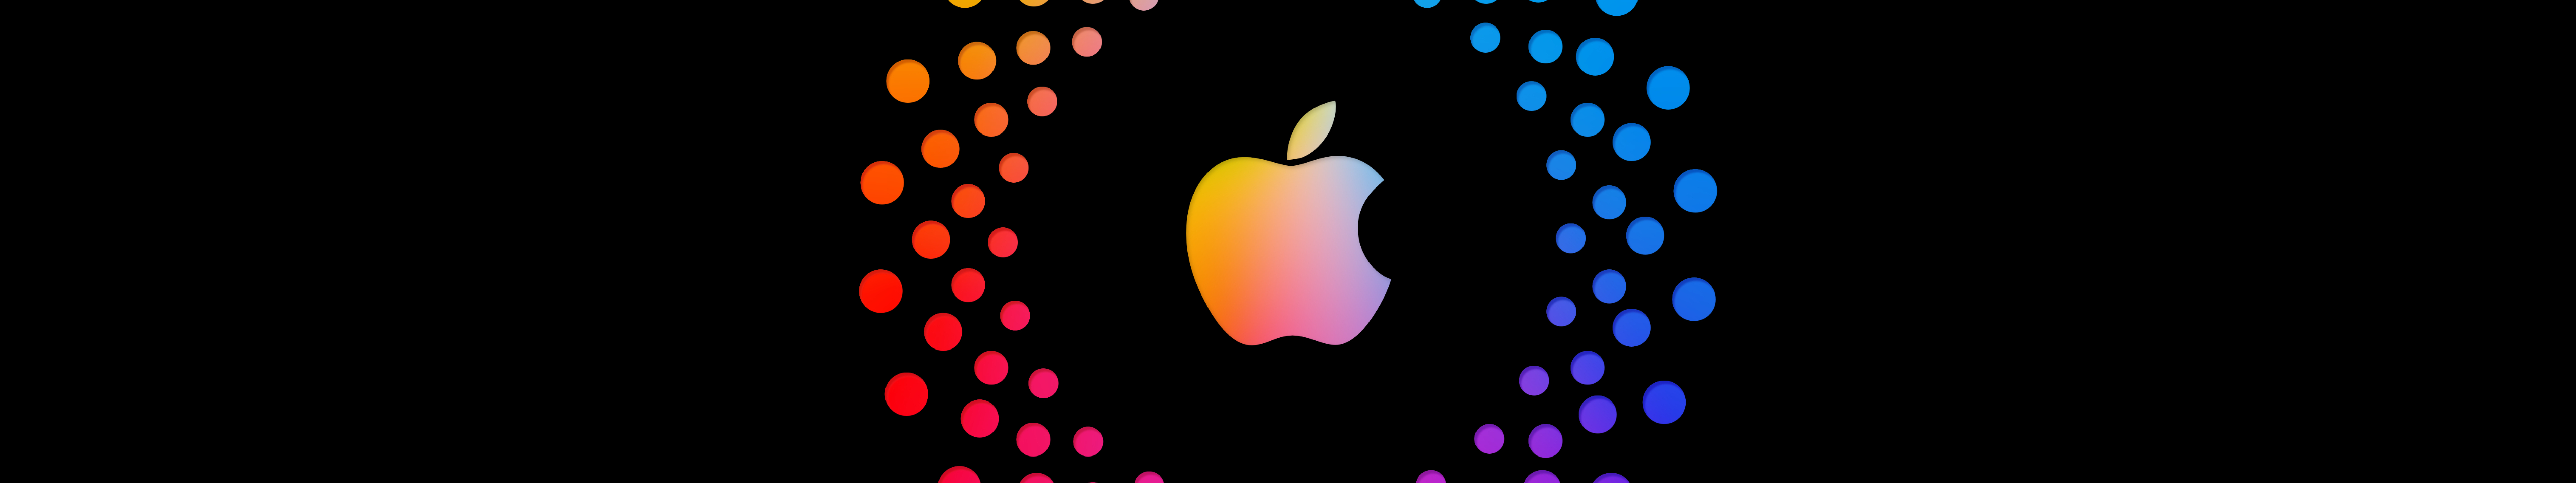 7680x1440 Apple 4k Logo Art 7680x1440 Resolution Wallpaper, HD Hi-Tech ...